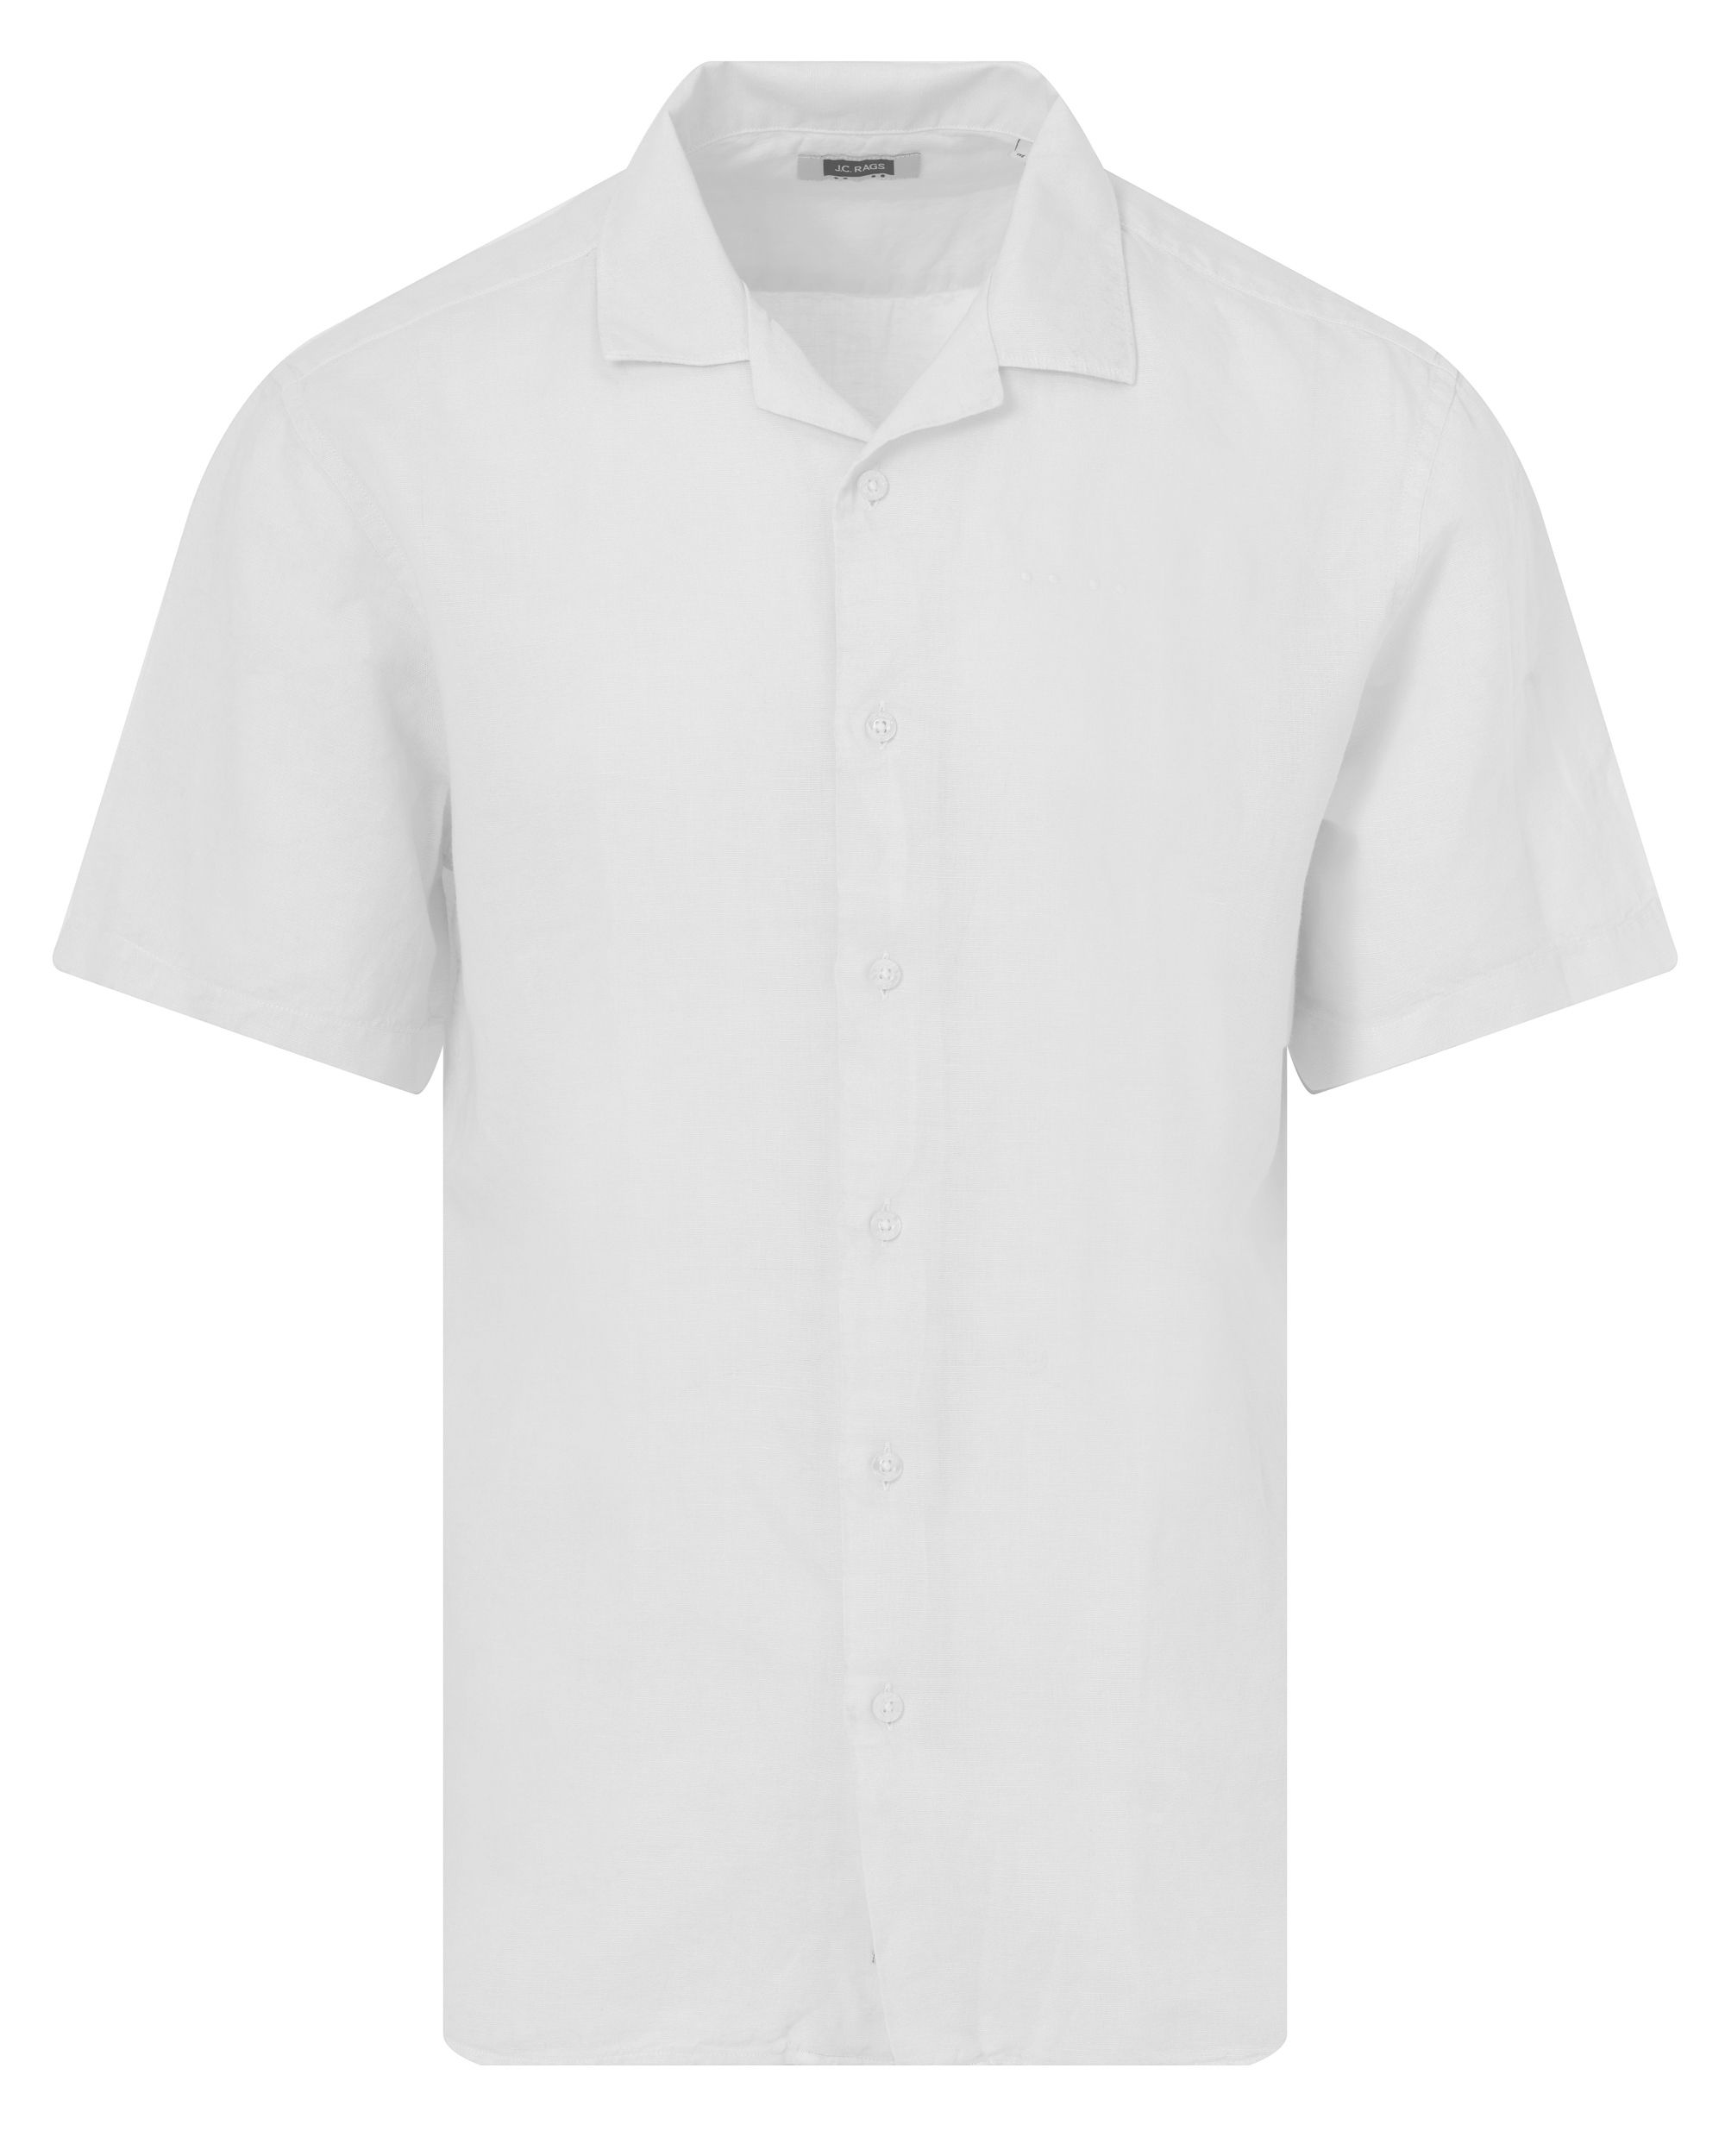 J.C. RAGS Elvis Casual Overhemd KM WHITE 082305-003-L